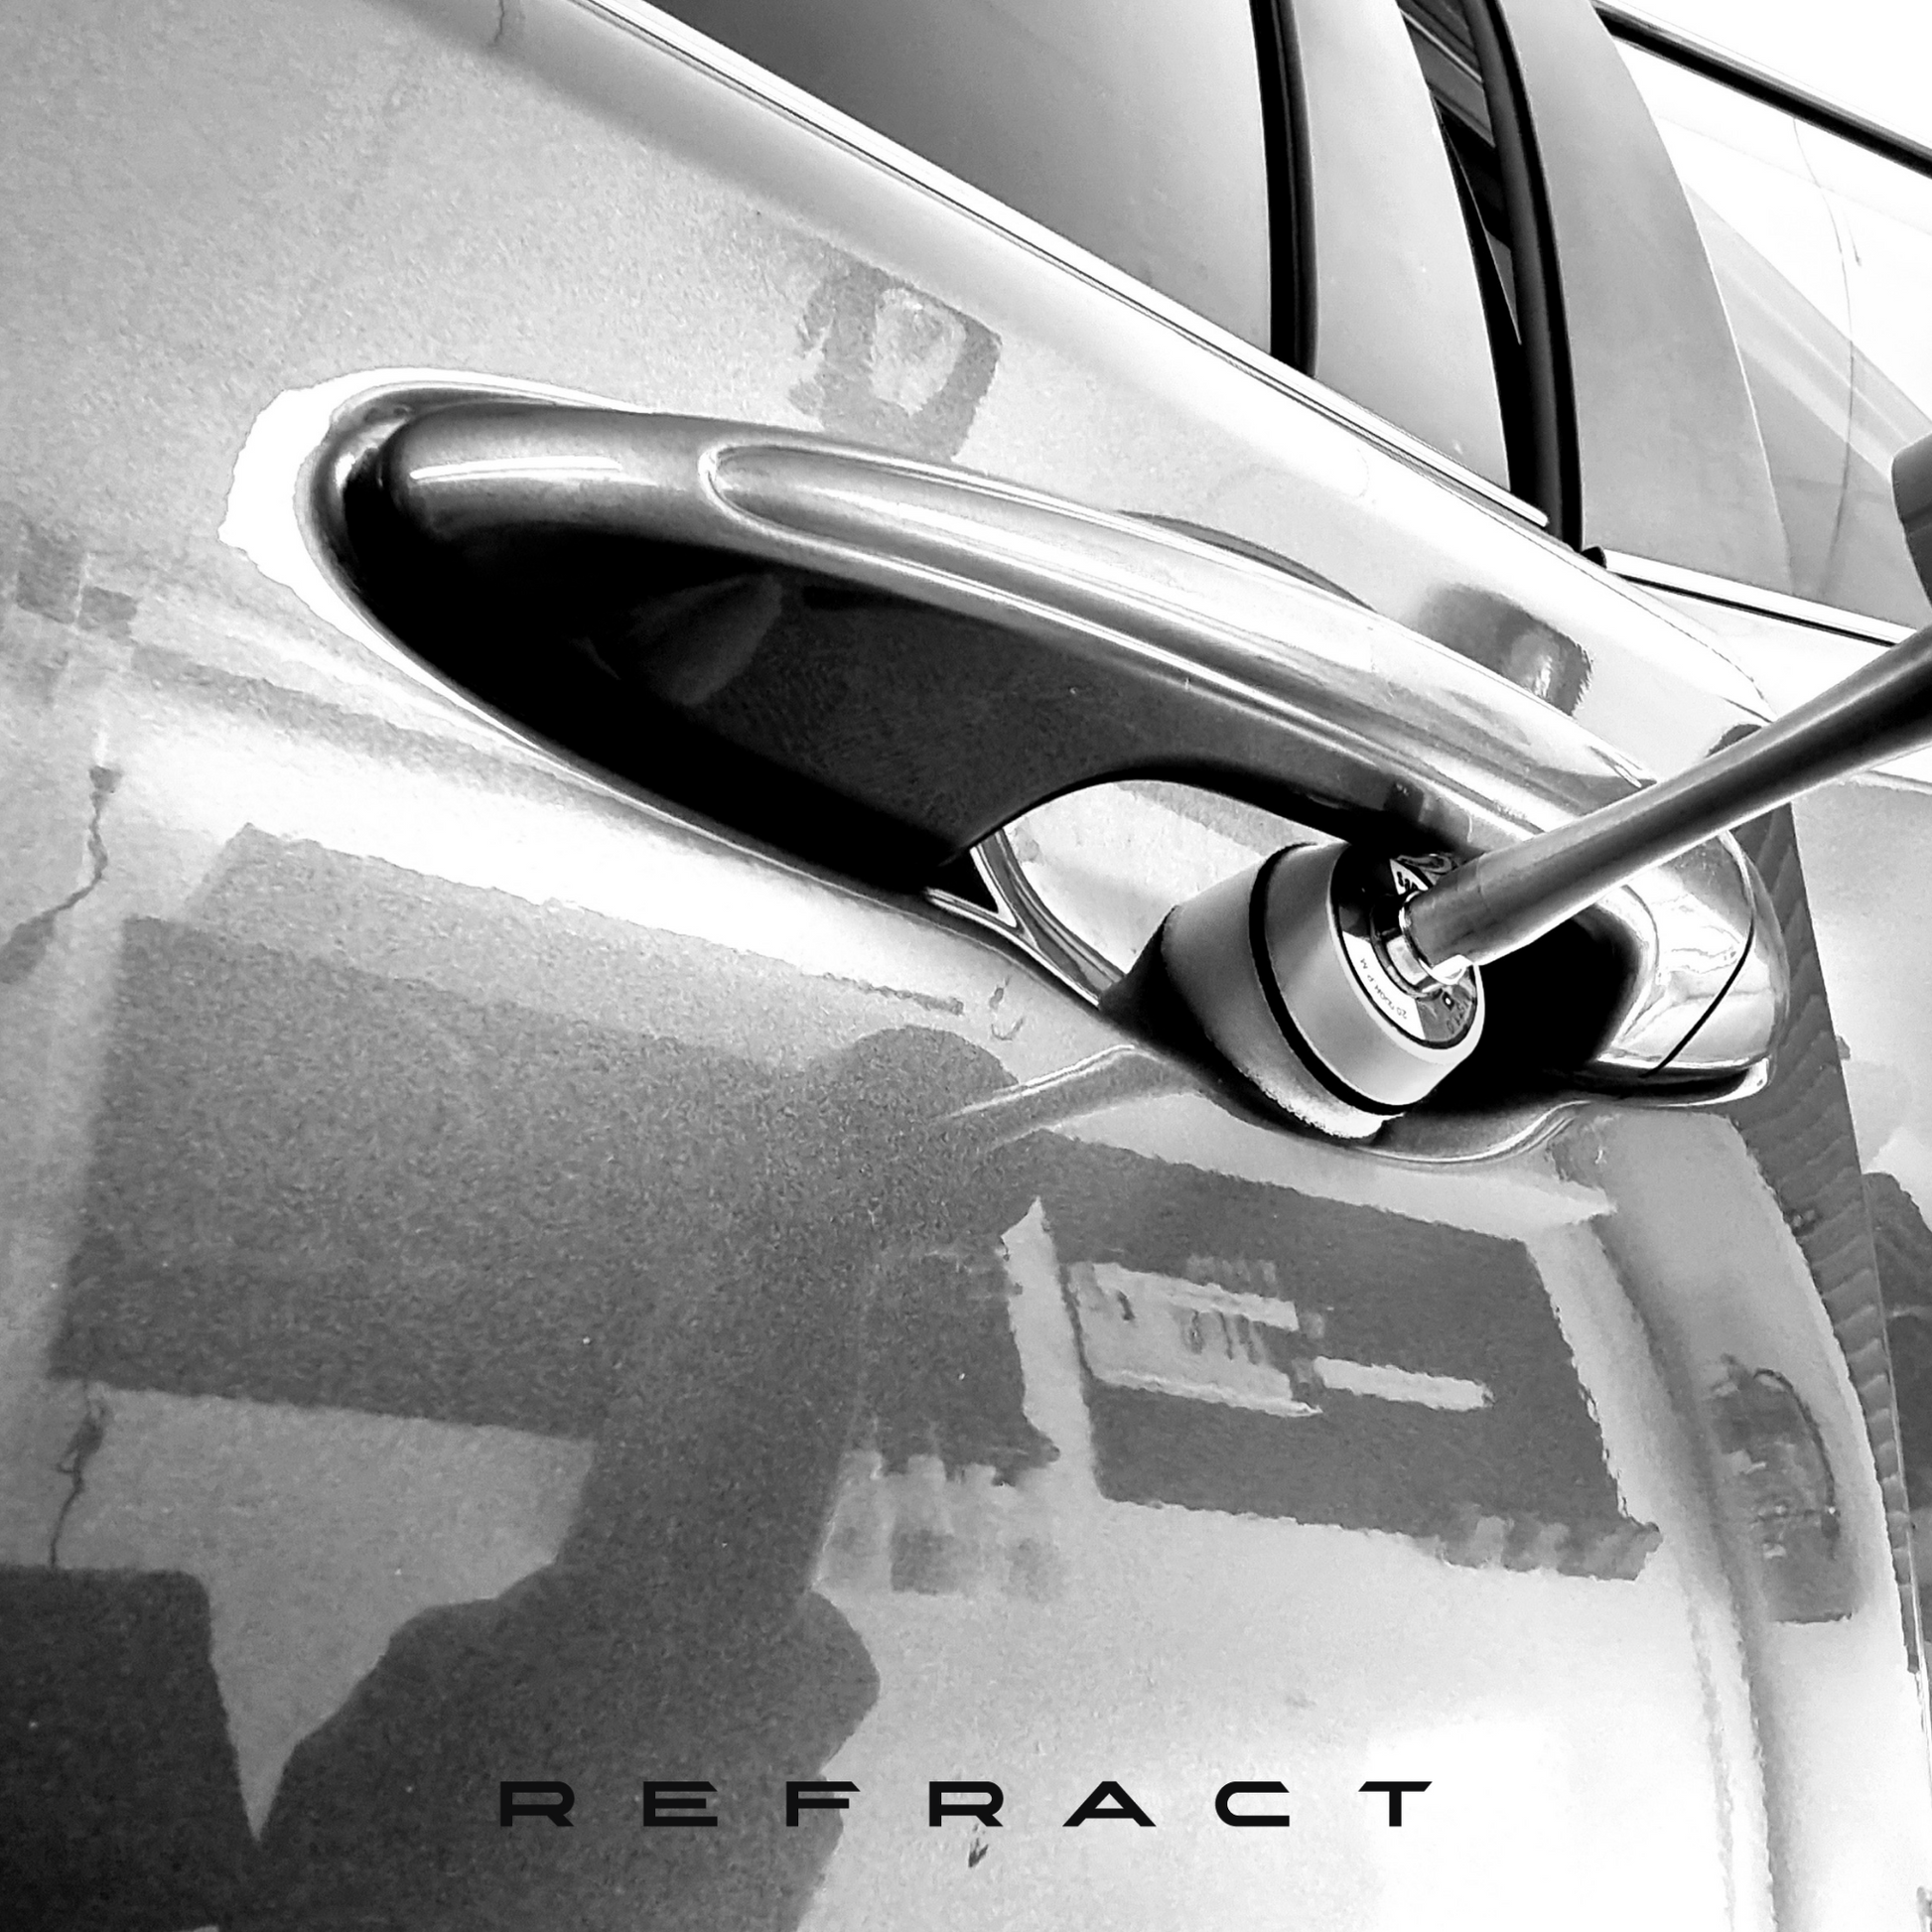 Refract Premium Car Care Products Refract Mini Nano Battery Polisher Kit $349.95